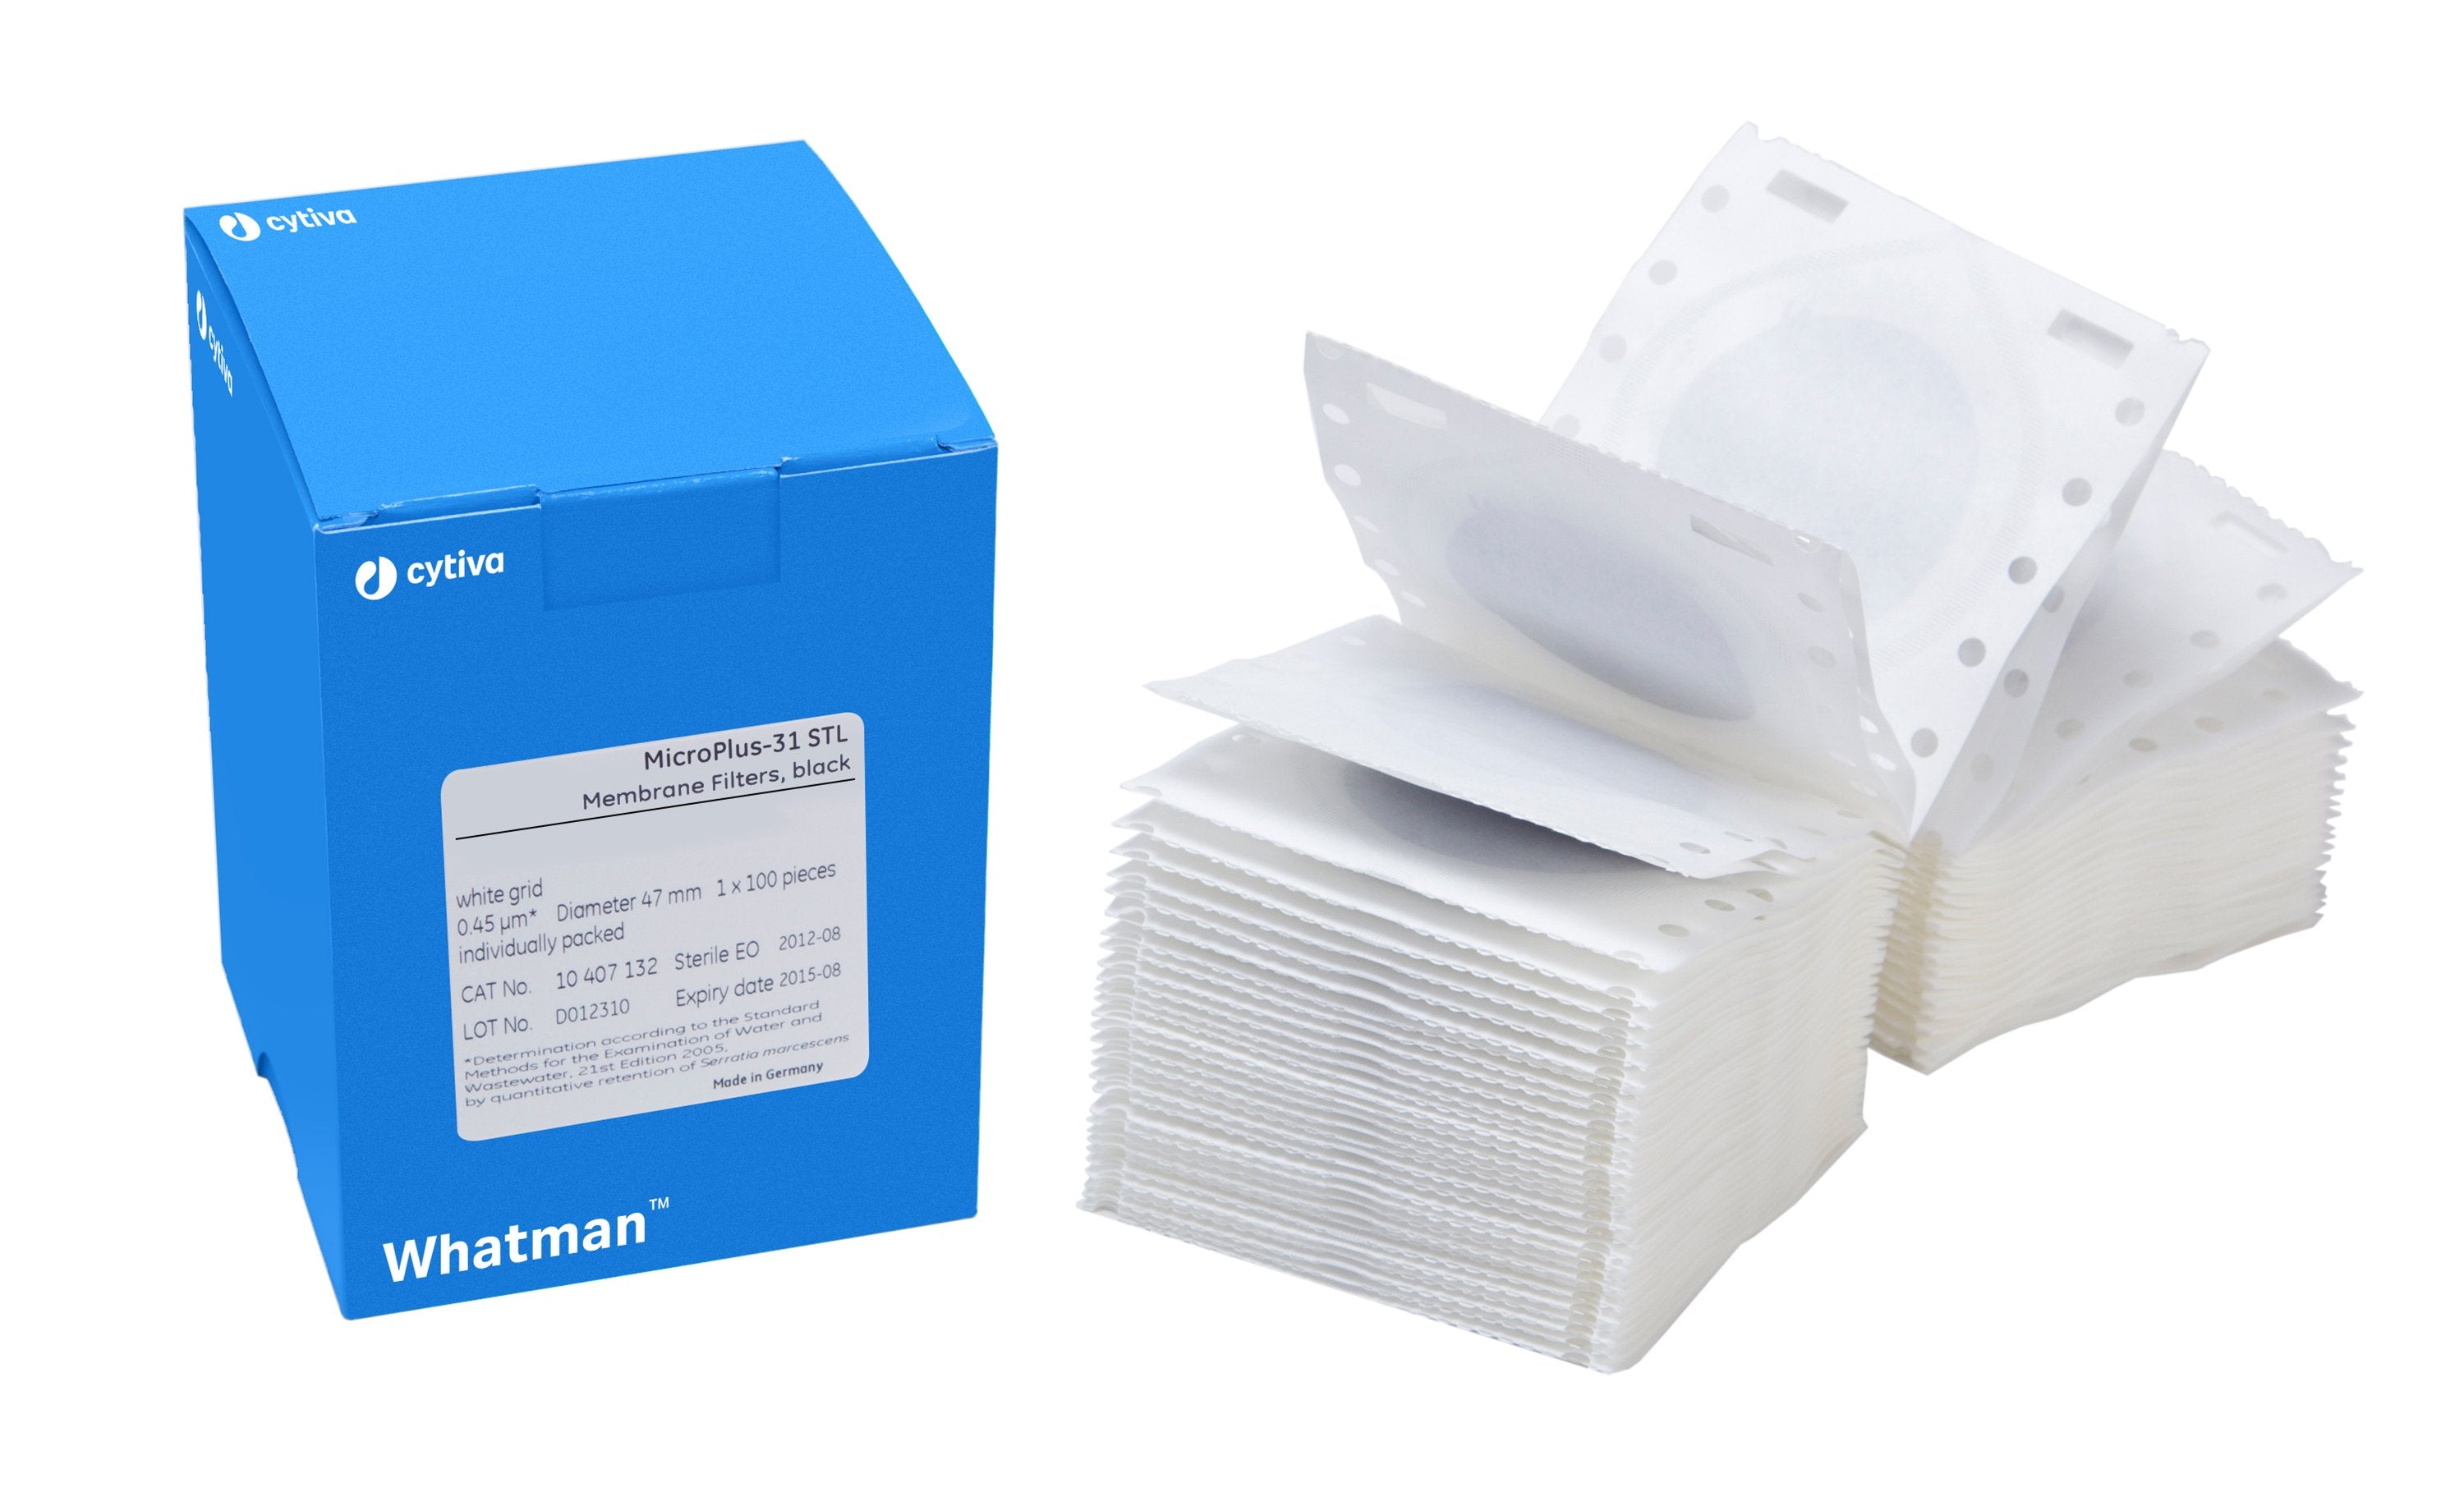 Whatman 10407112 MicroPlus-21, 47mm Dia, White, Black Grid, Sterile For Use with Whatman Membrane-Butler, 100/pk, 4 pk/bx (PN: 10407112)